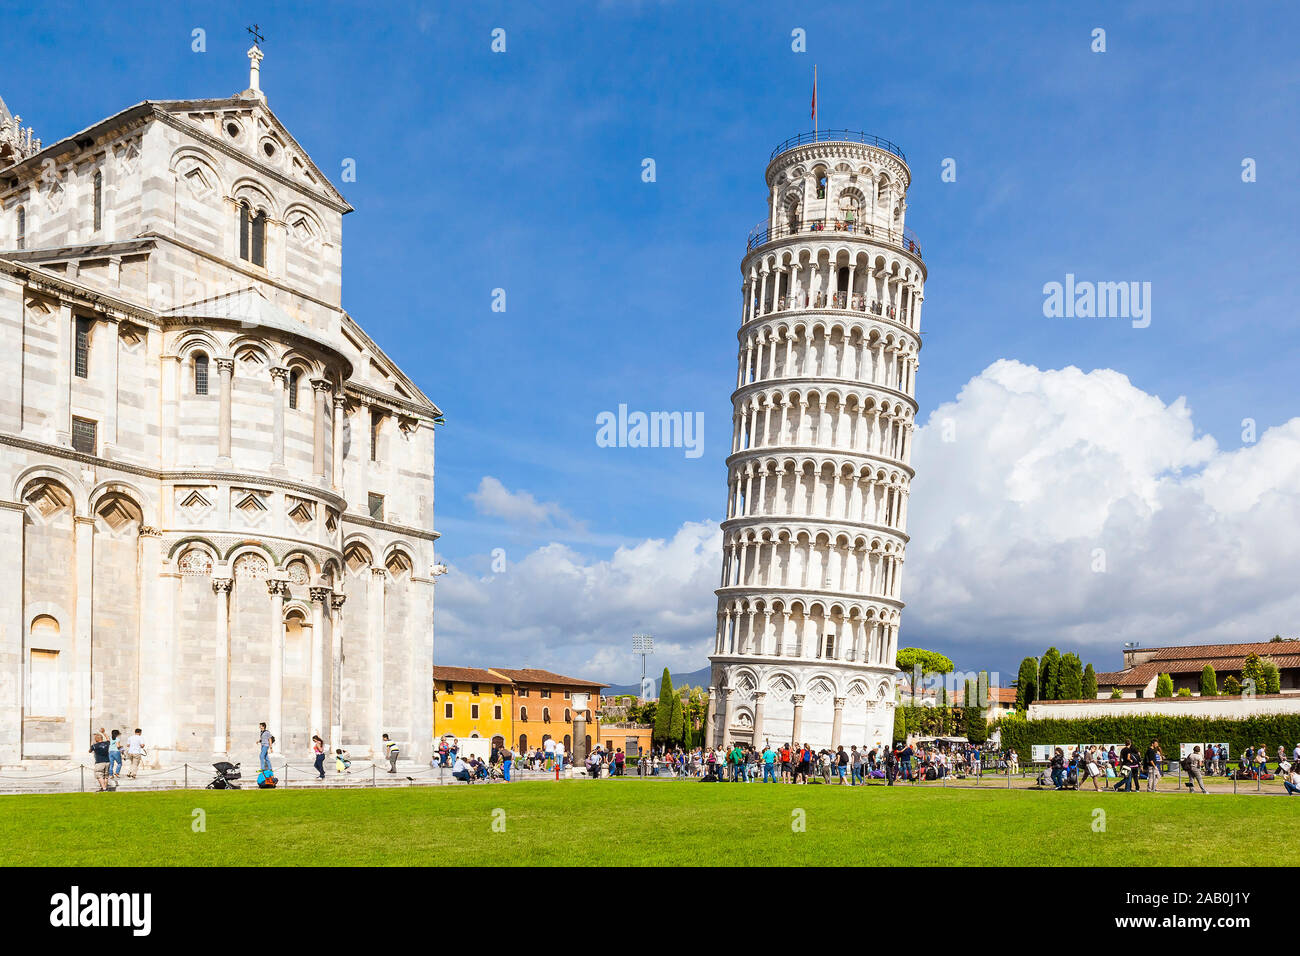 Der schiefe Turm von Pisa am Piazza dei Miracoli Foto Stock